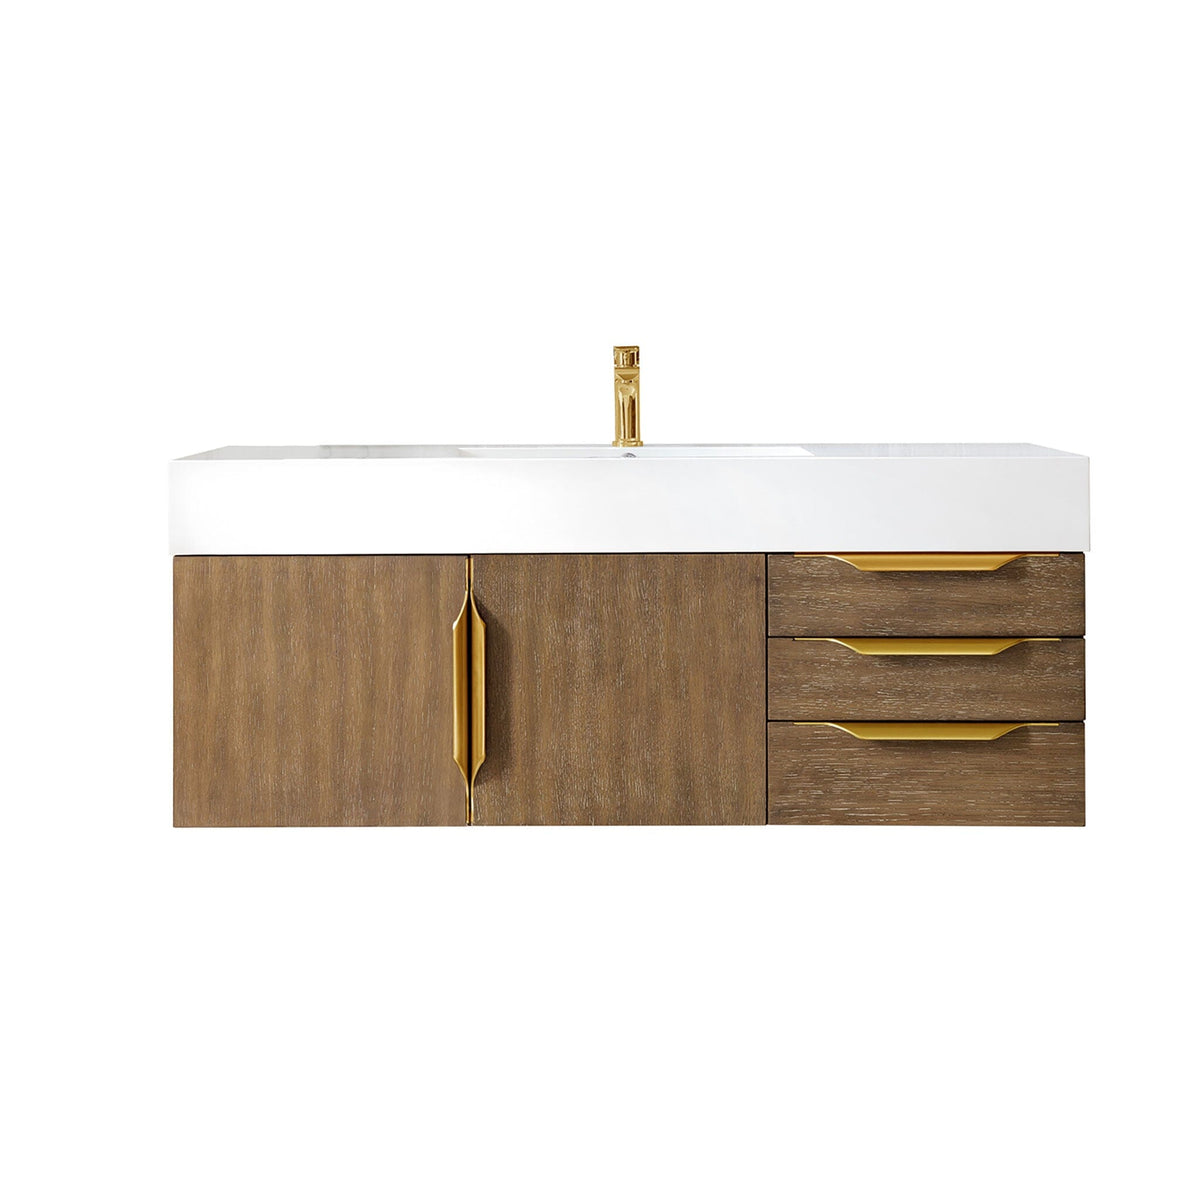 48" Mercer Island Single Bathroom Vanity, Latte Oak w/ Radiant Gold